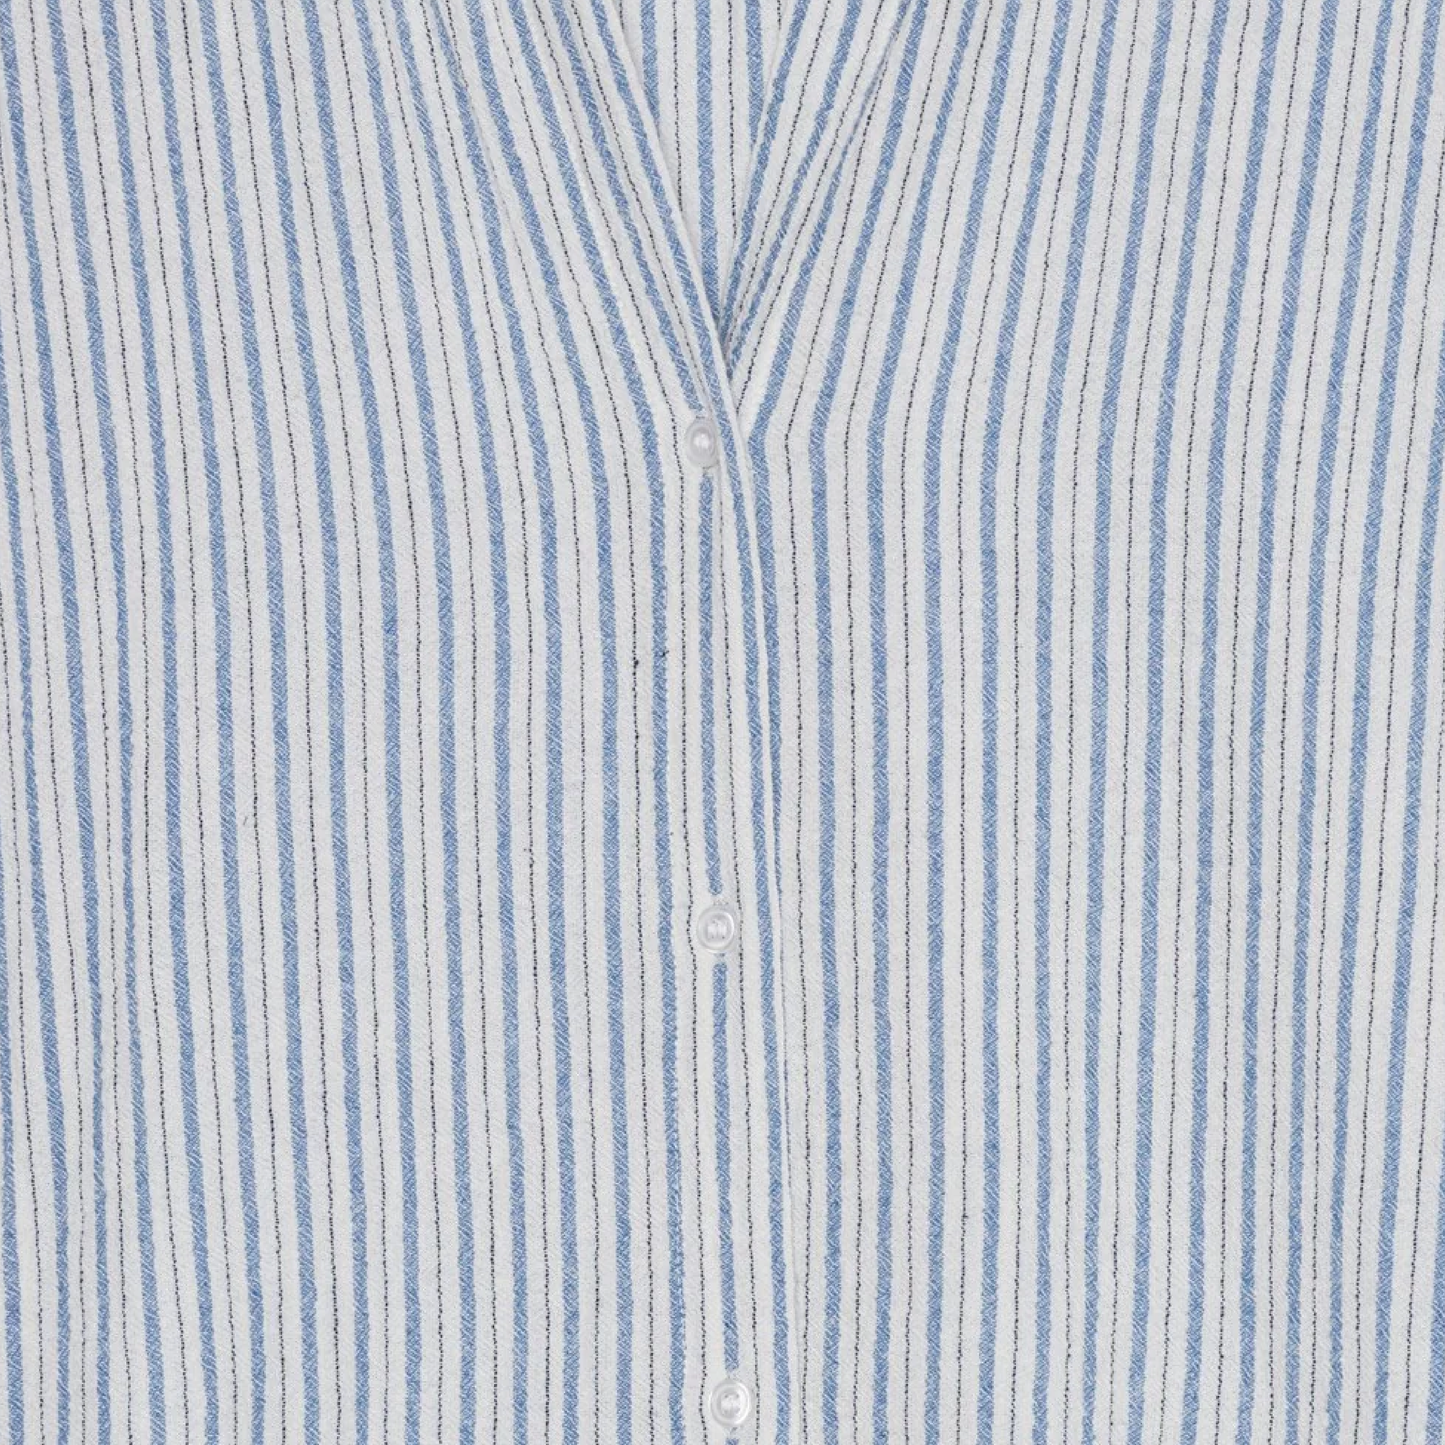 Remain Skjortekjole Stripe, Ecru/Light Blue